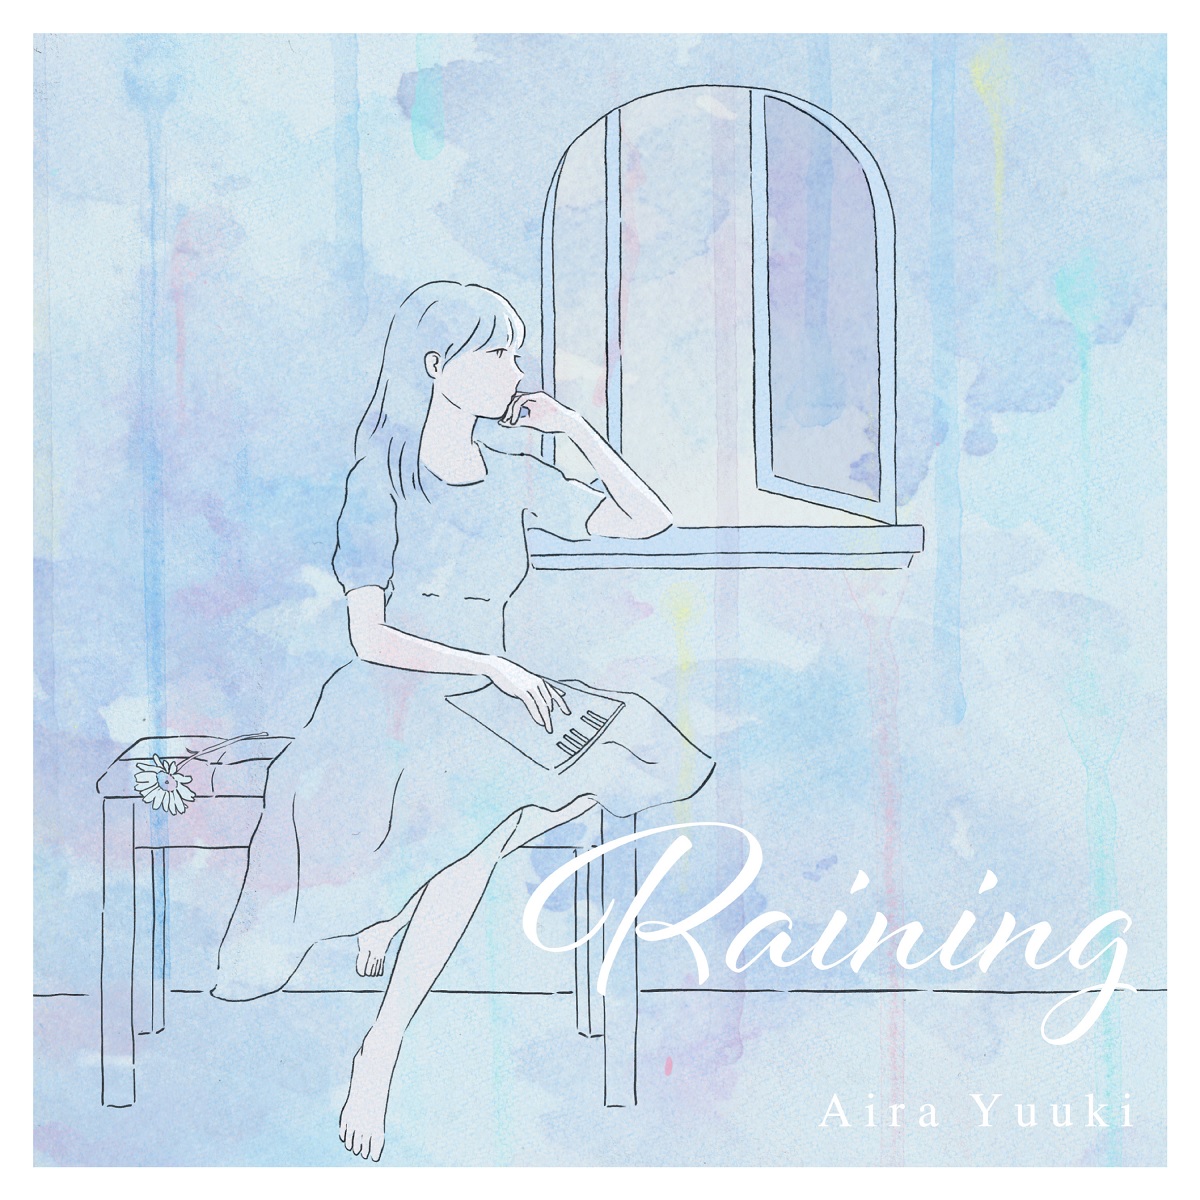 Cover art for『Aira Yuuki - Raining』from the release『Raining